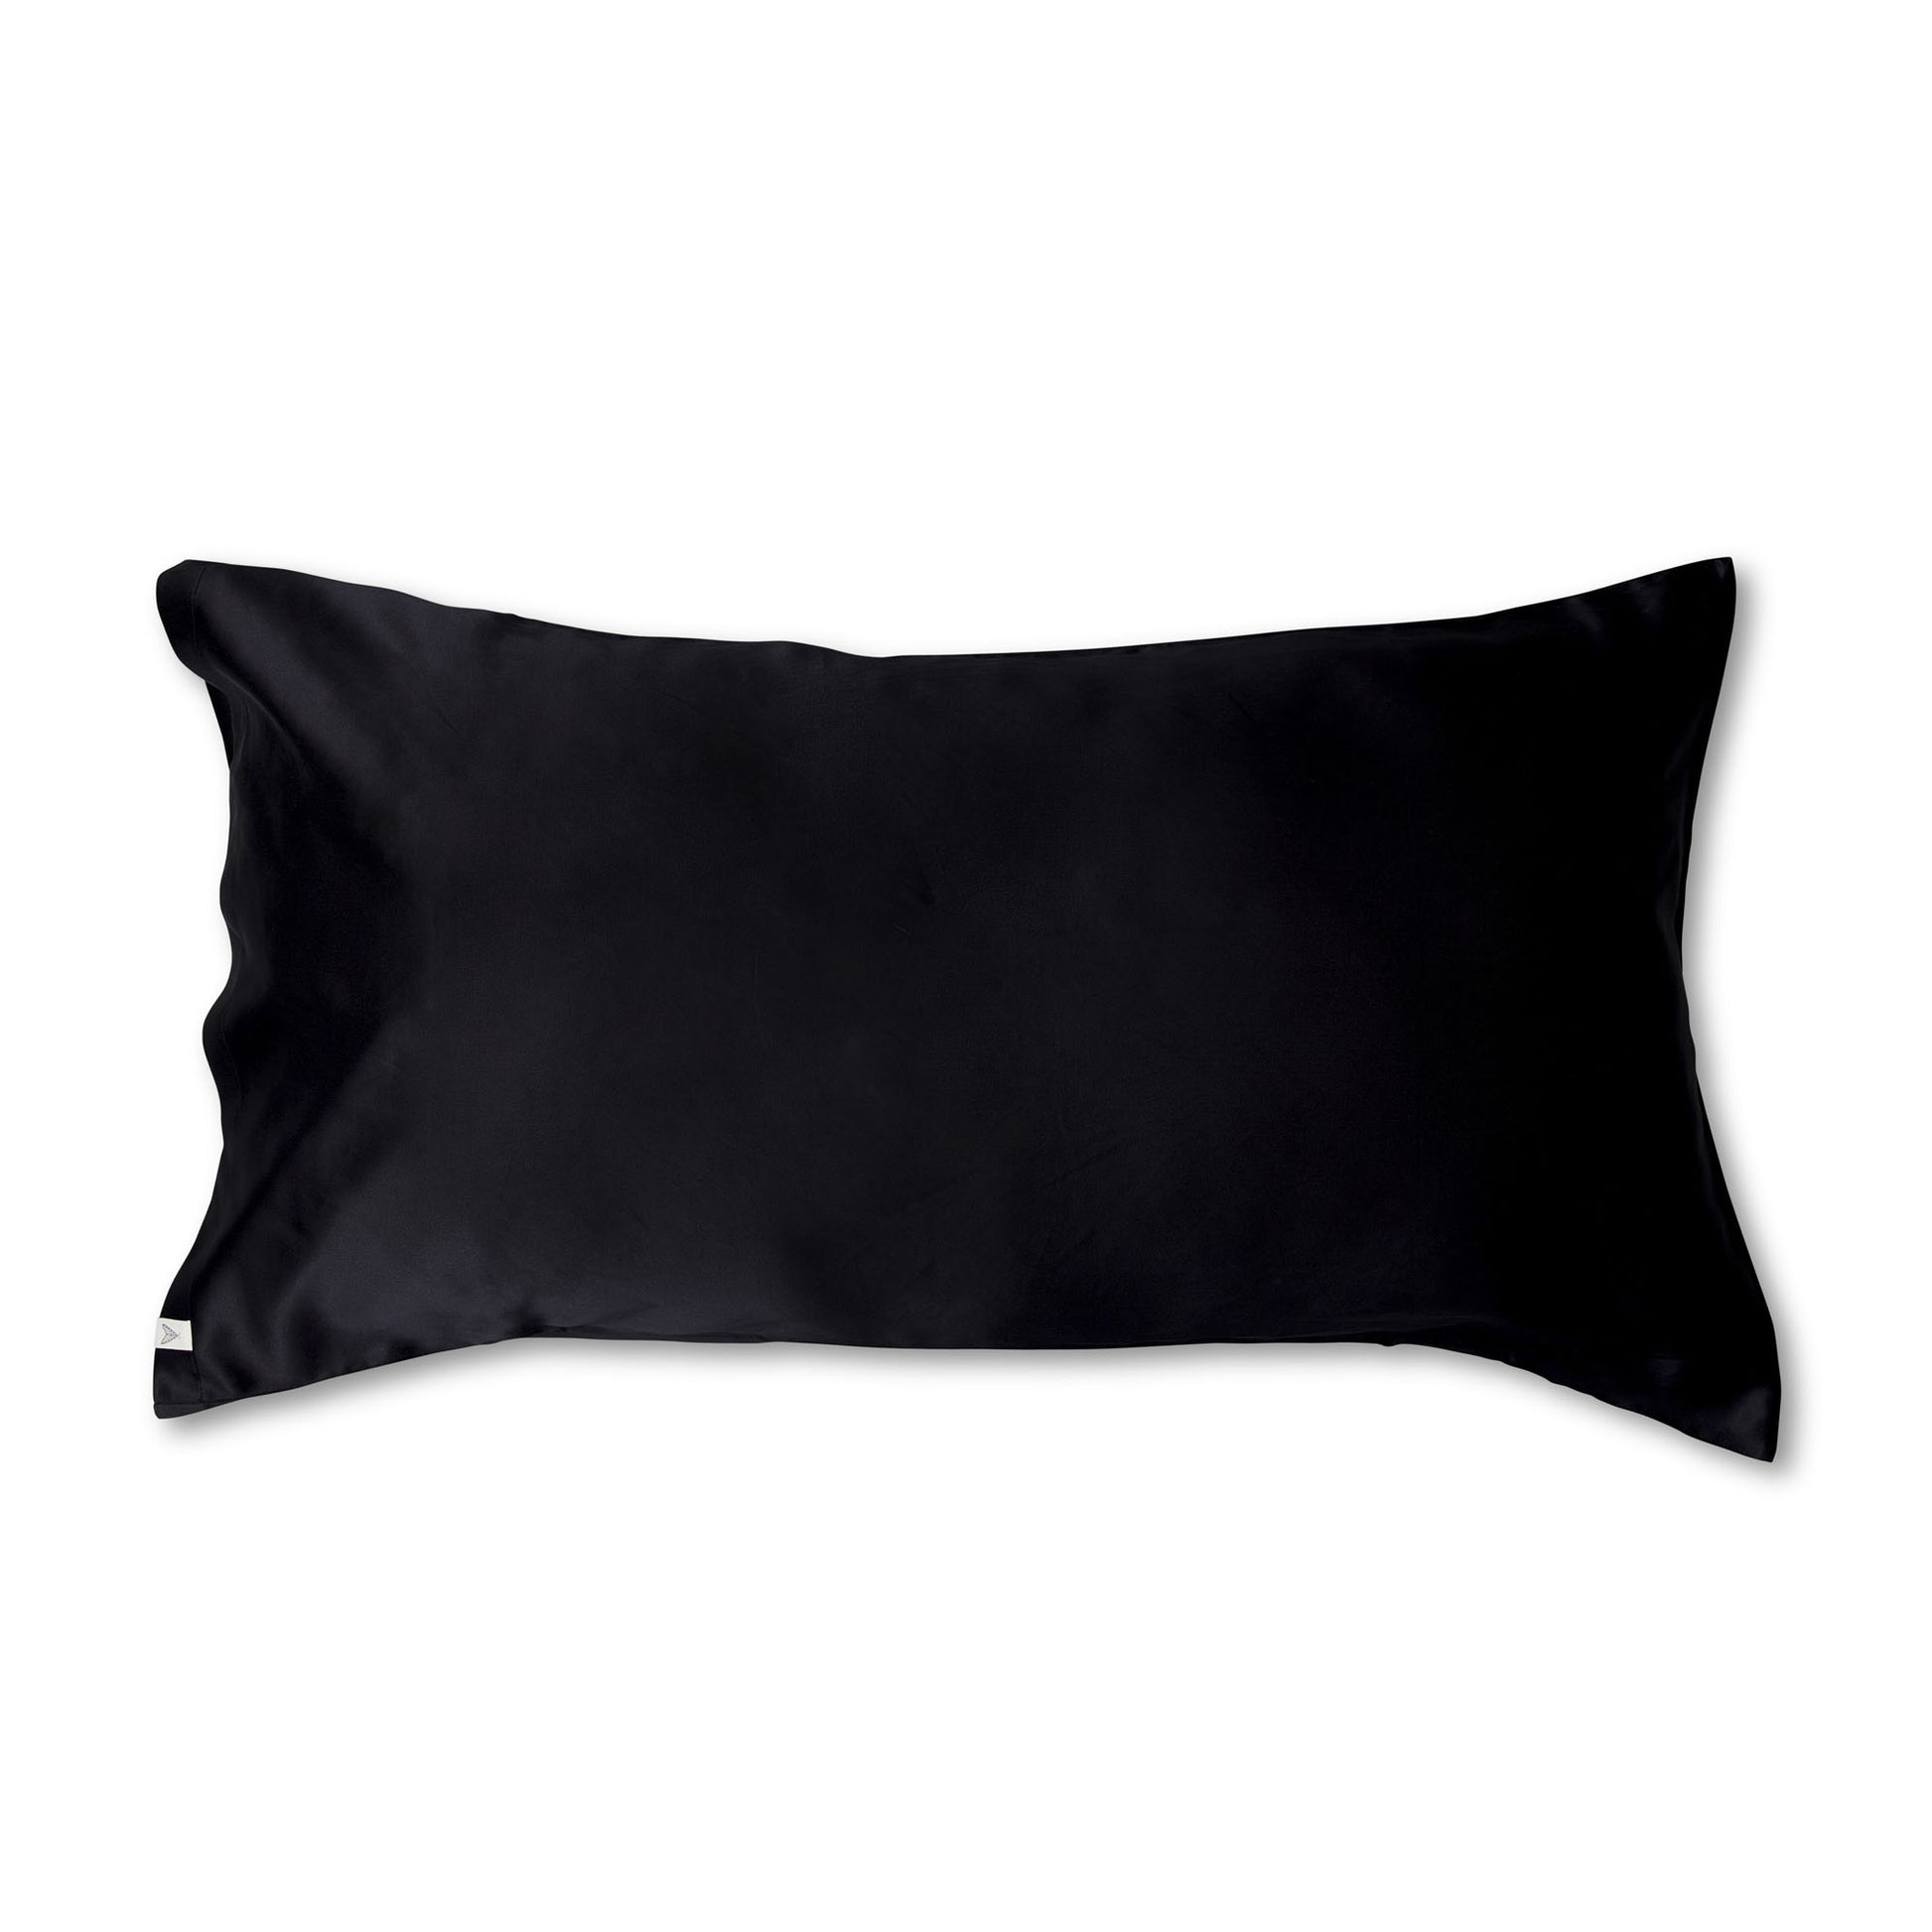 Black ethical peace silk pillowcase, king size